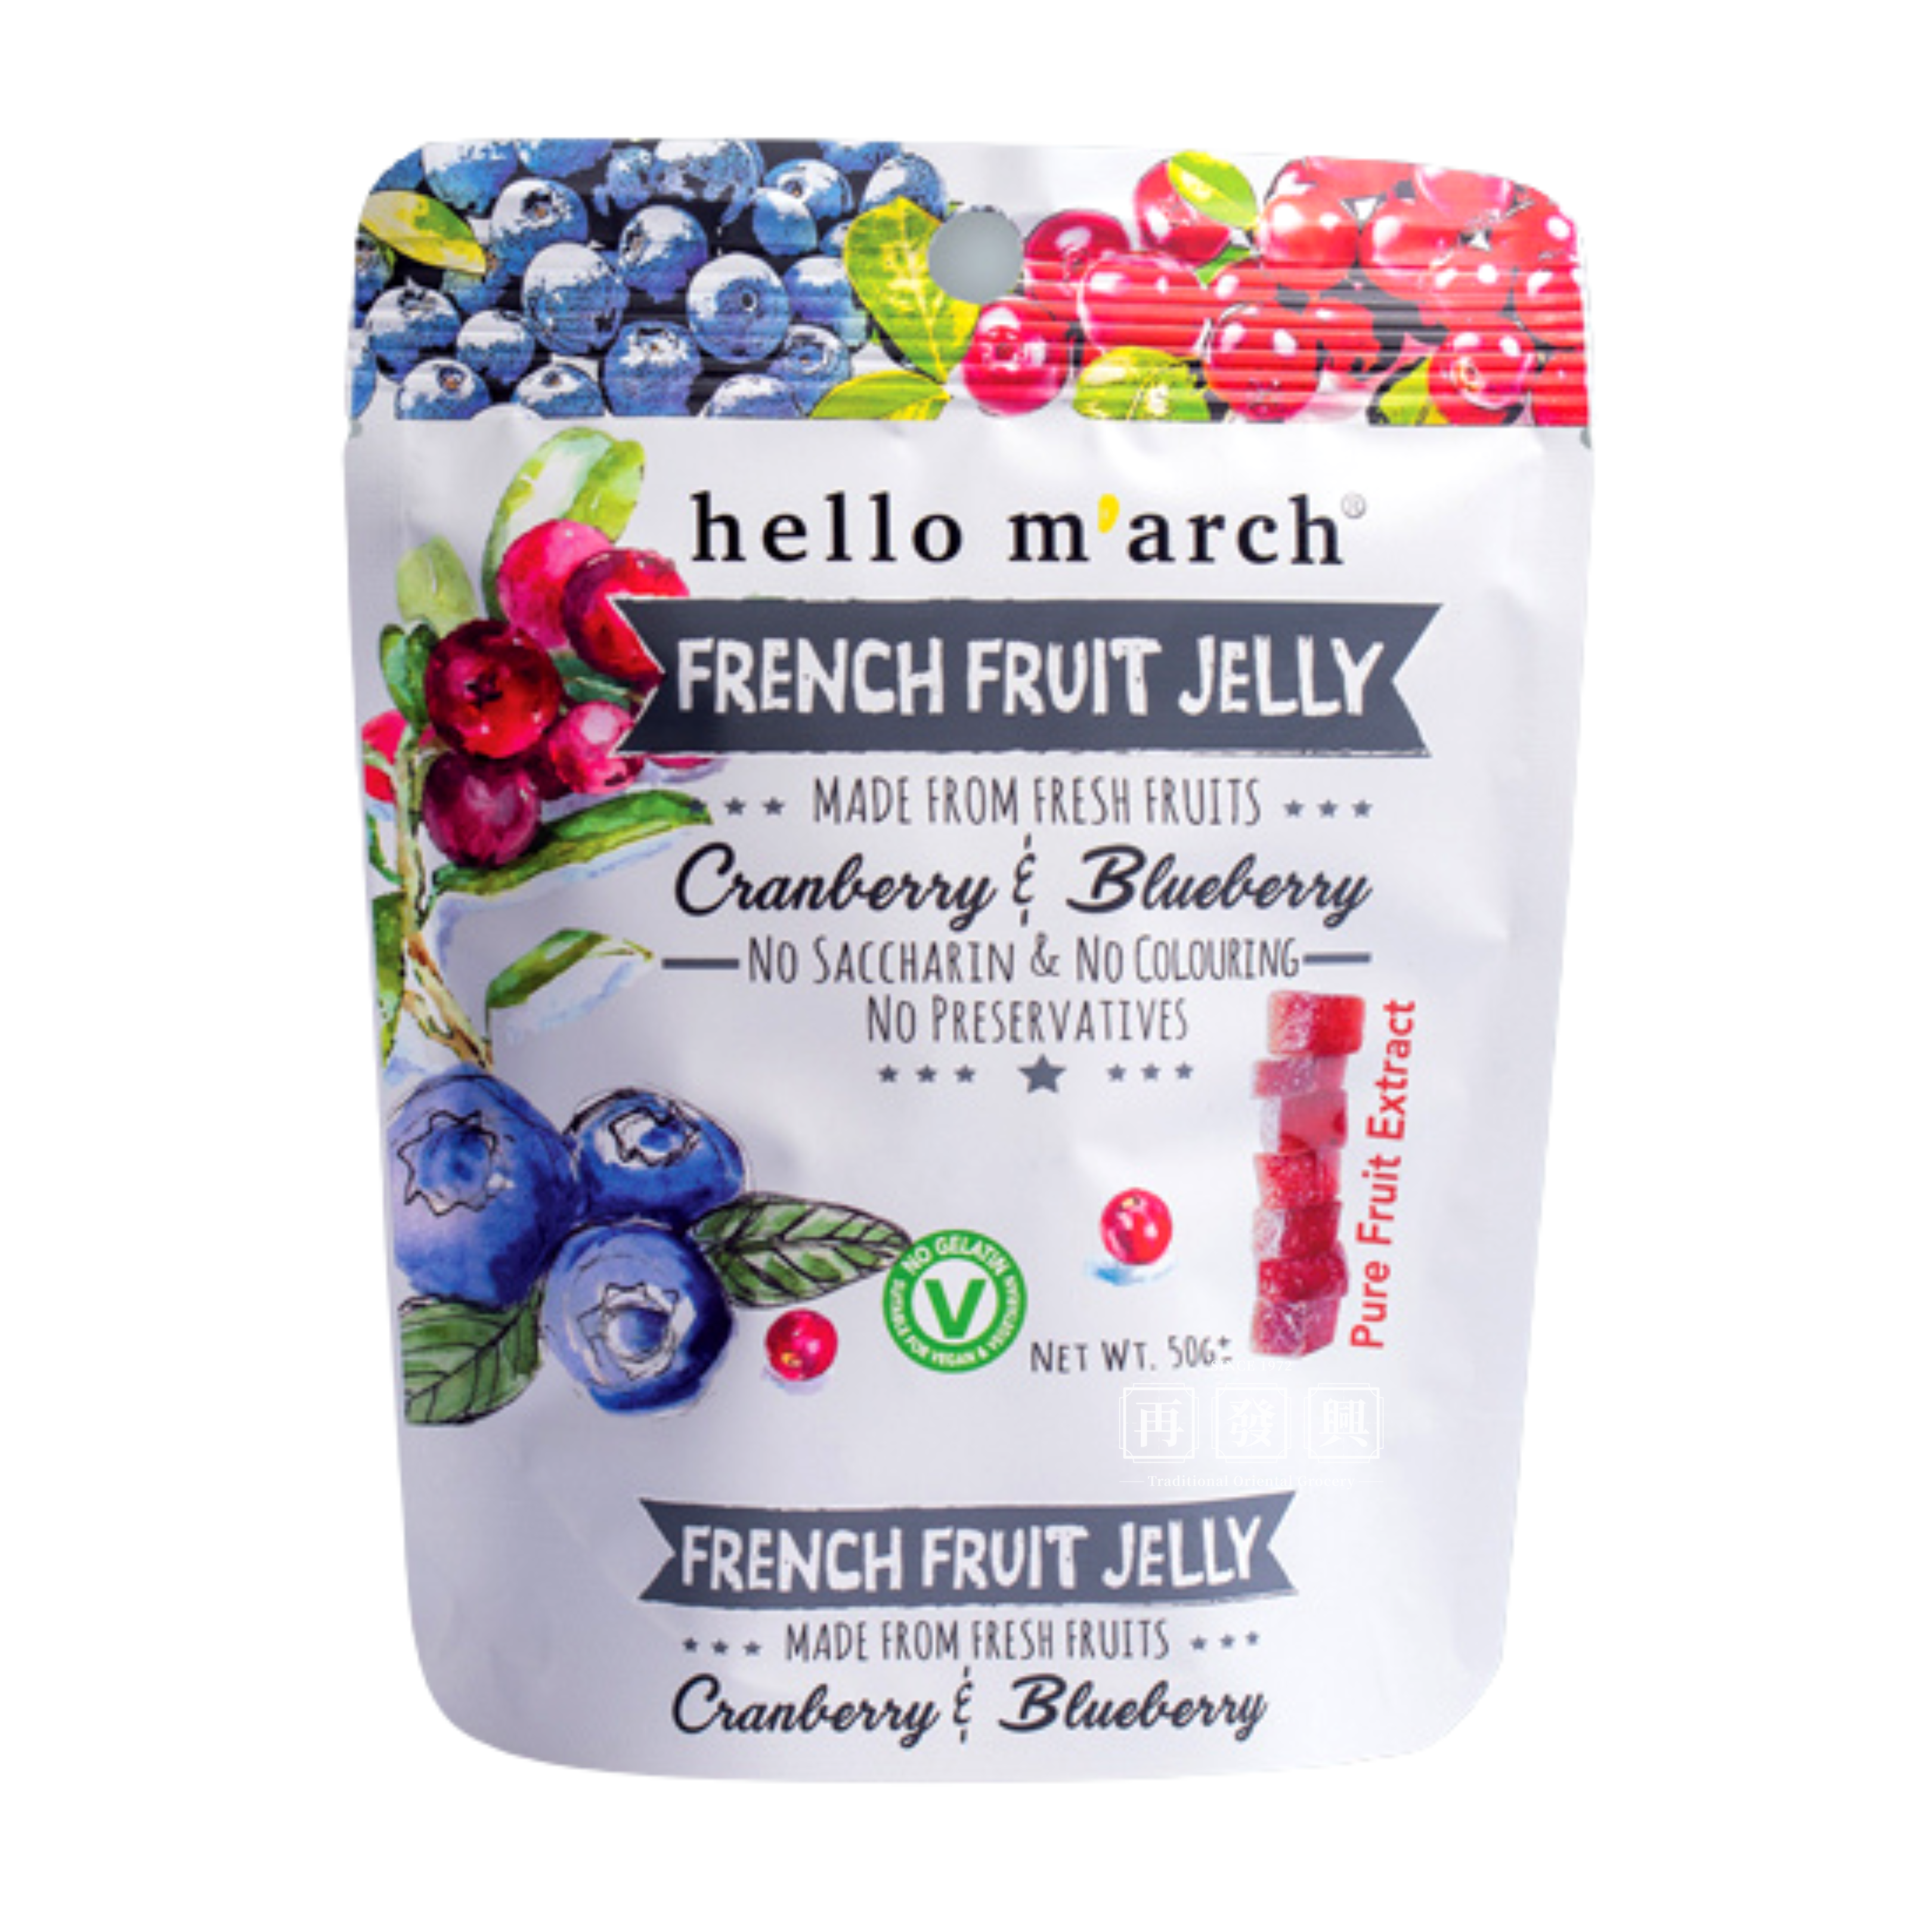 Hello M'arch French Fruit Jelly - Cranberry & Blueberry 法式果冻(蔓越莓和蓝莓) 50g